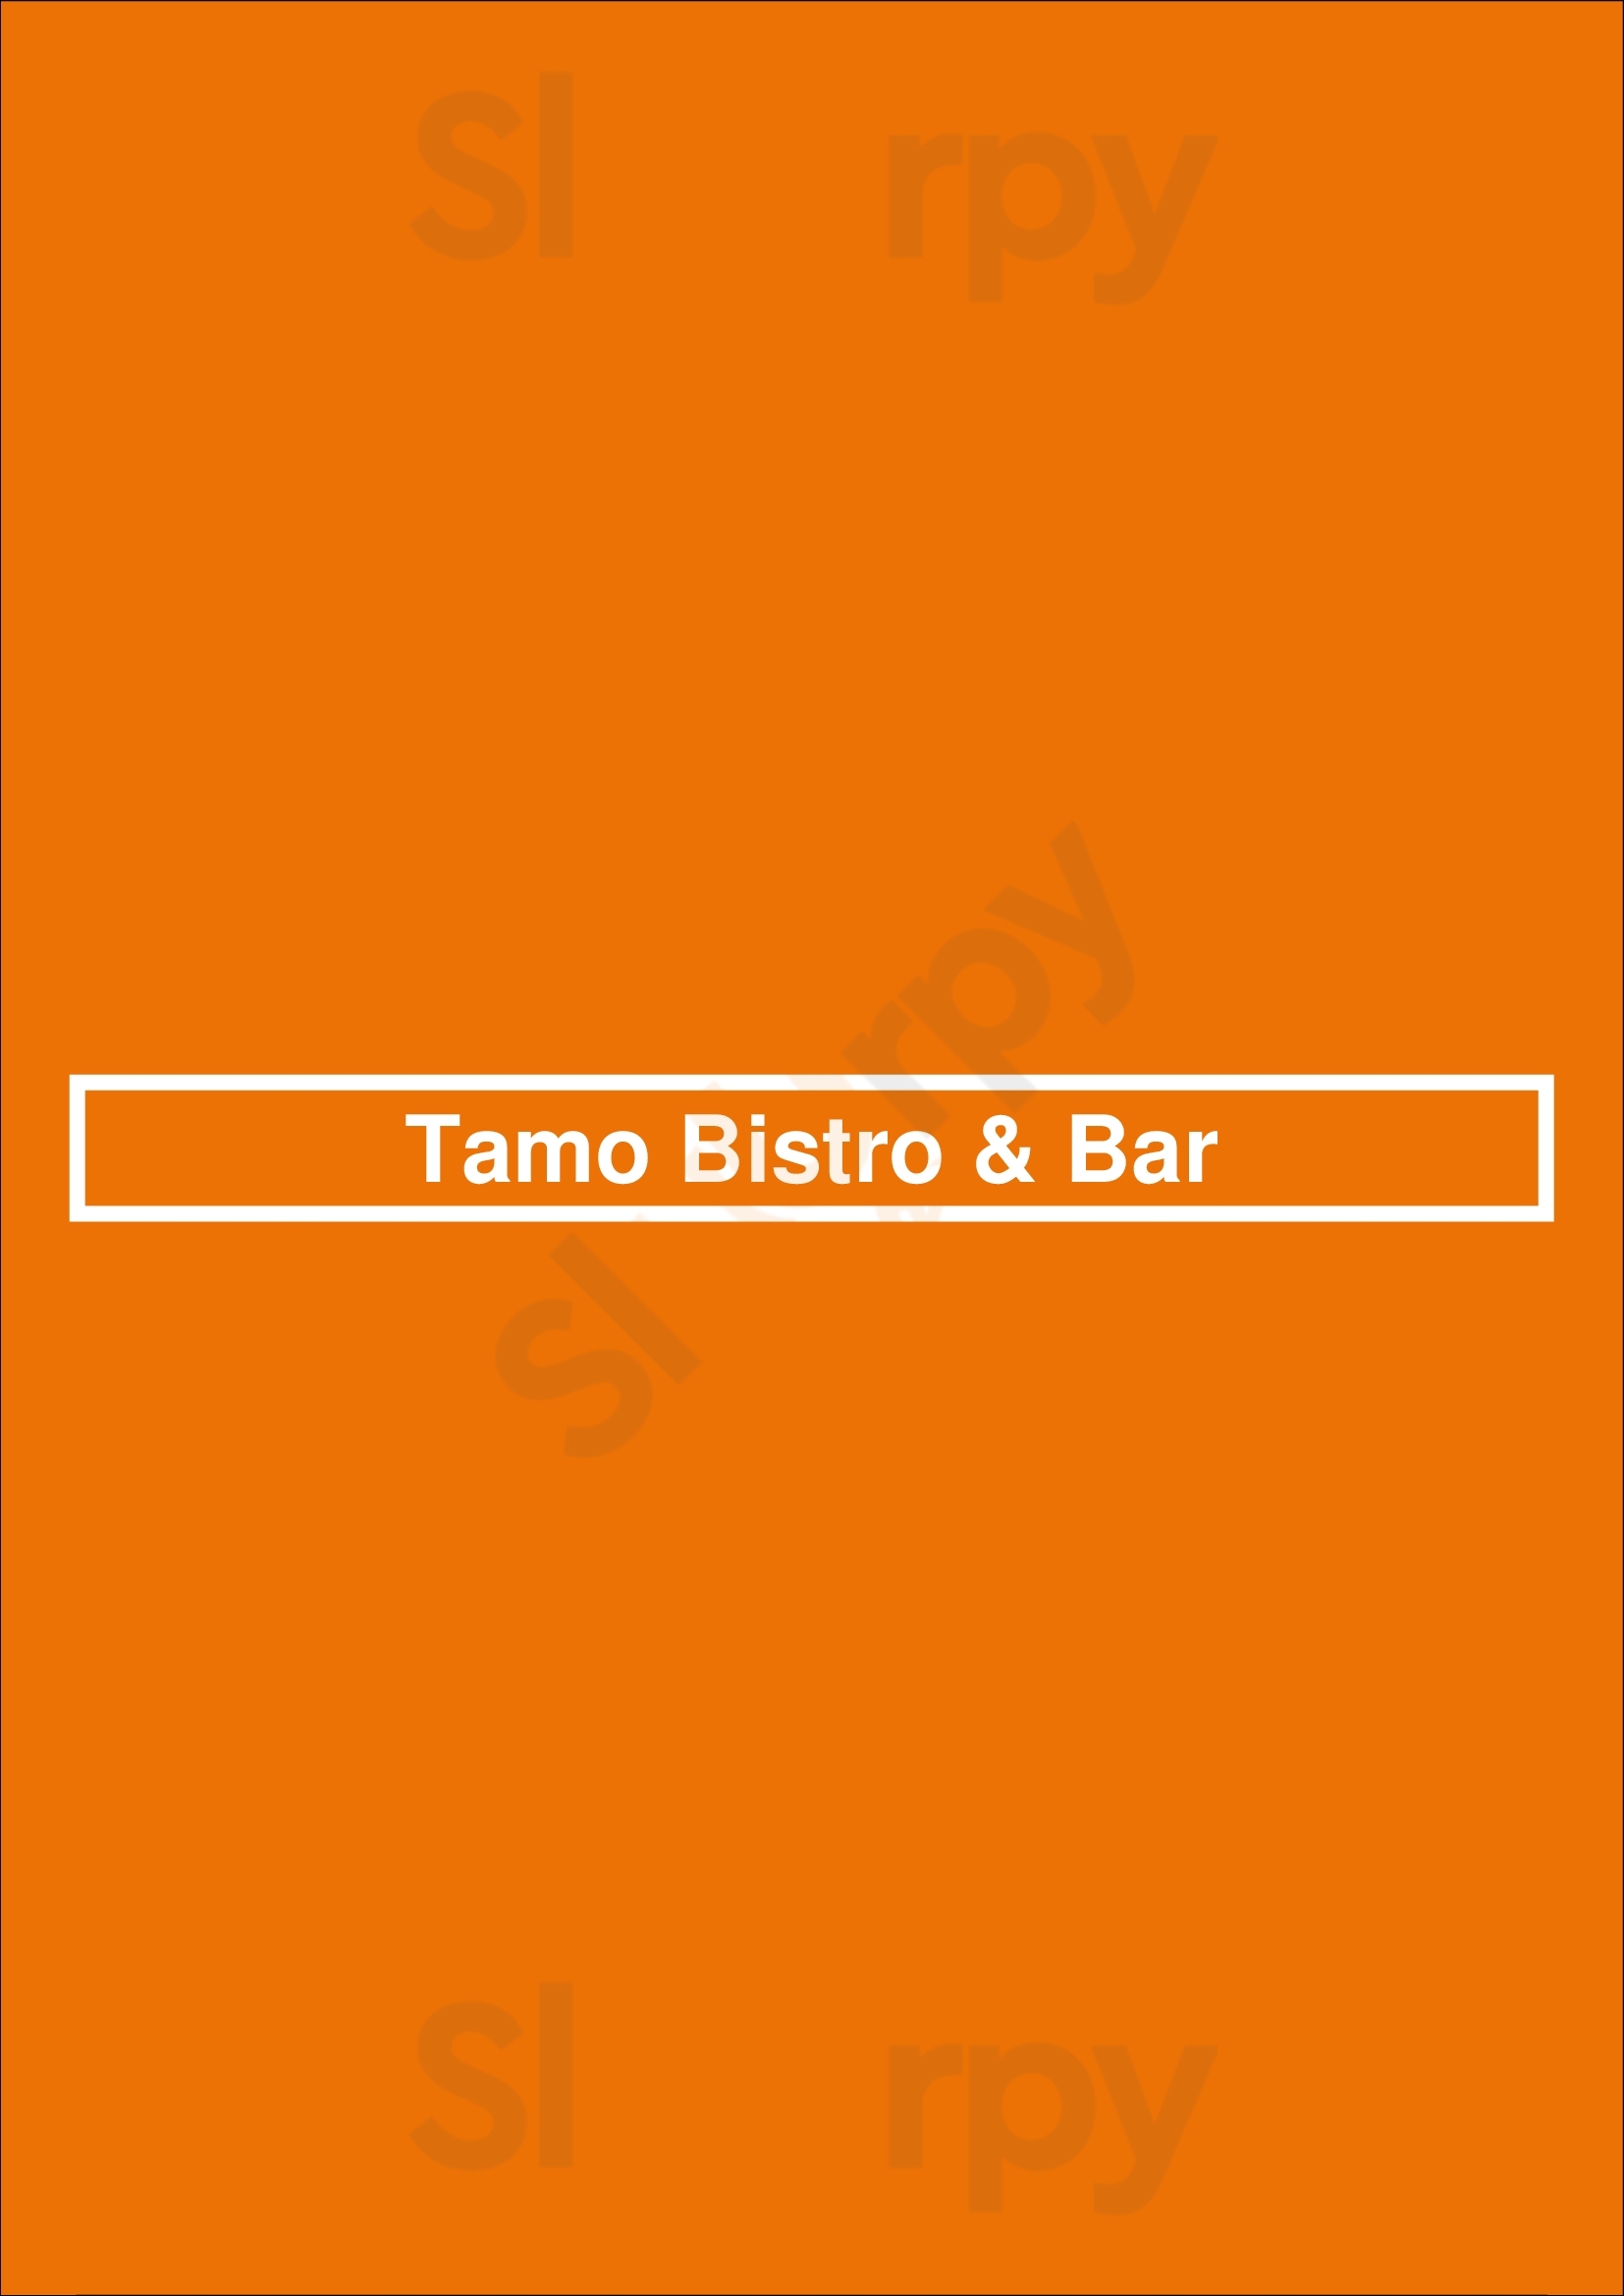 Tamo Bistro & Bar Boston Menu - 1